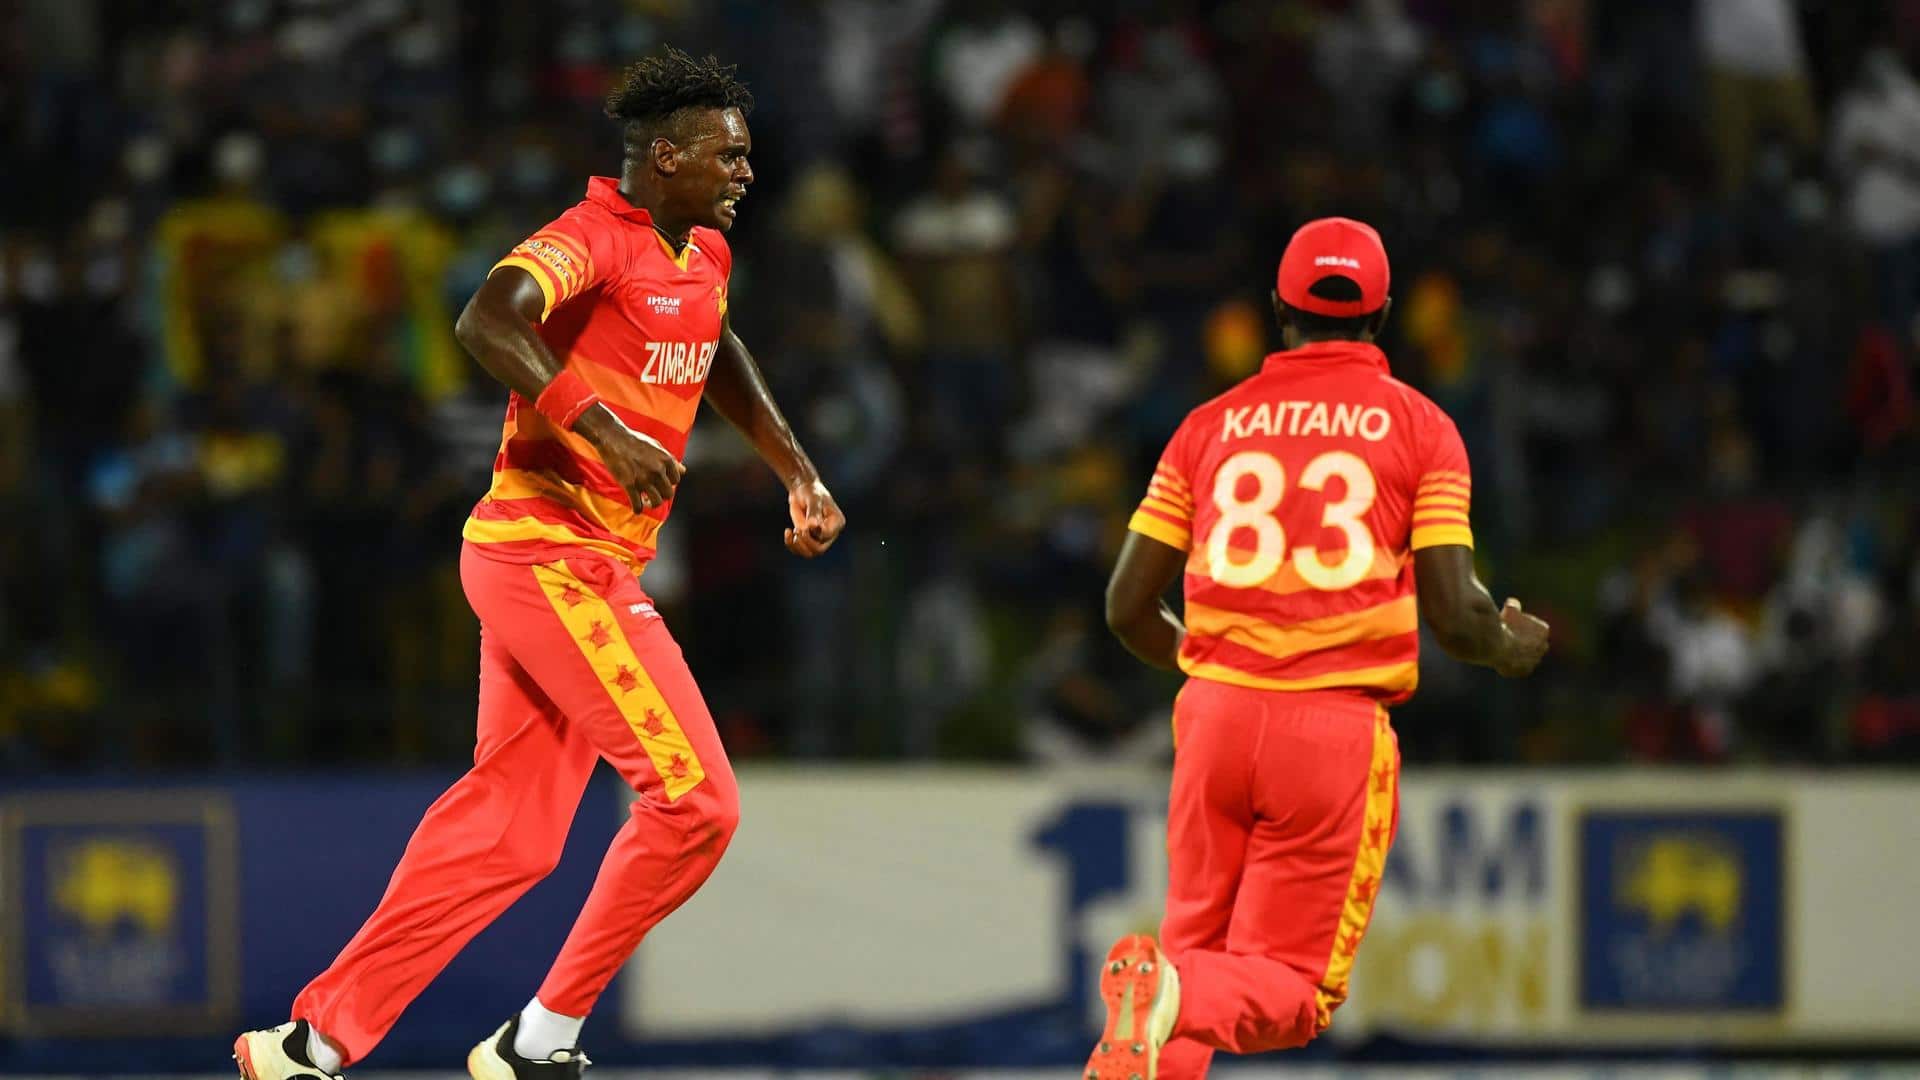 CWC Qualifiers: Zimbabwe's Richard Ngarava claims his best ODI figures